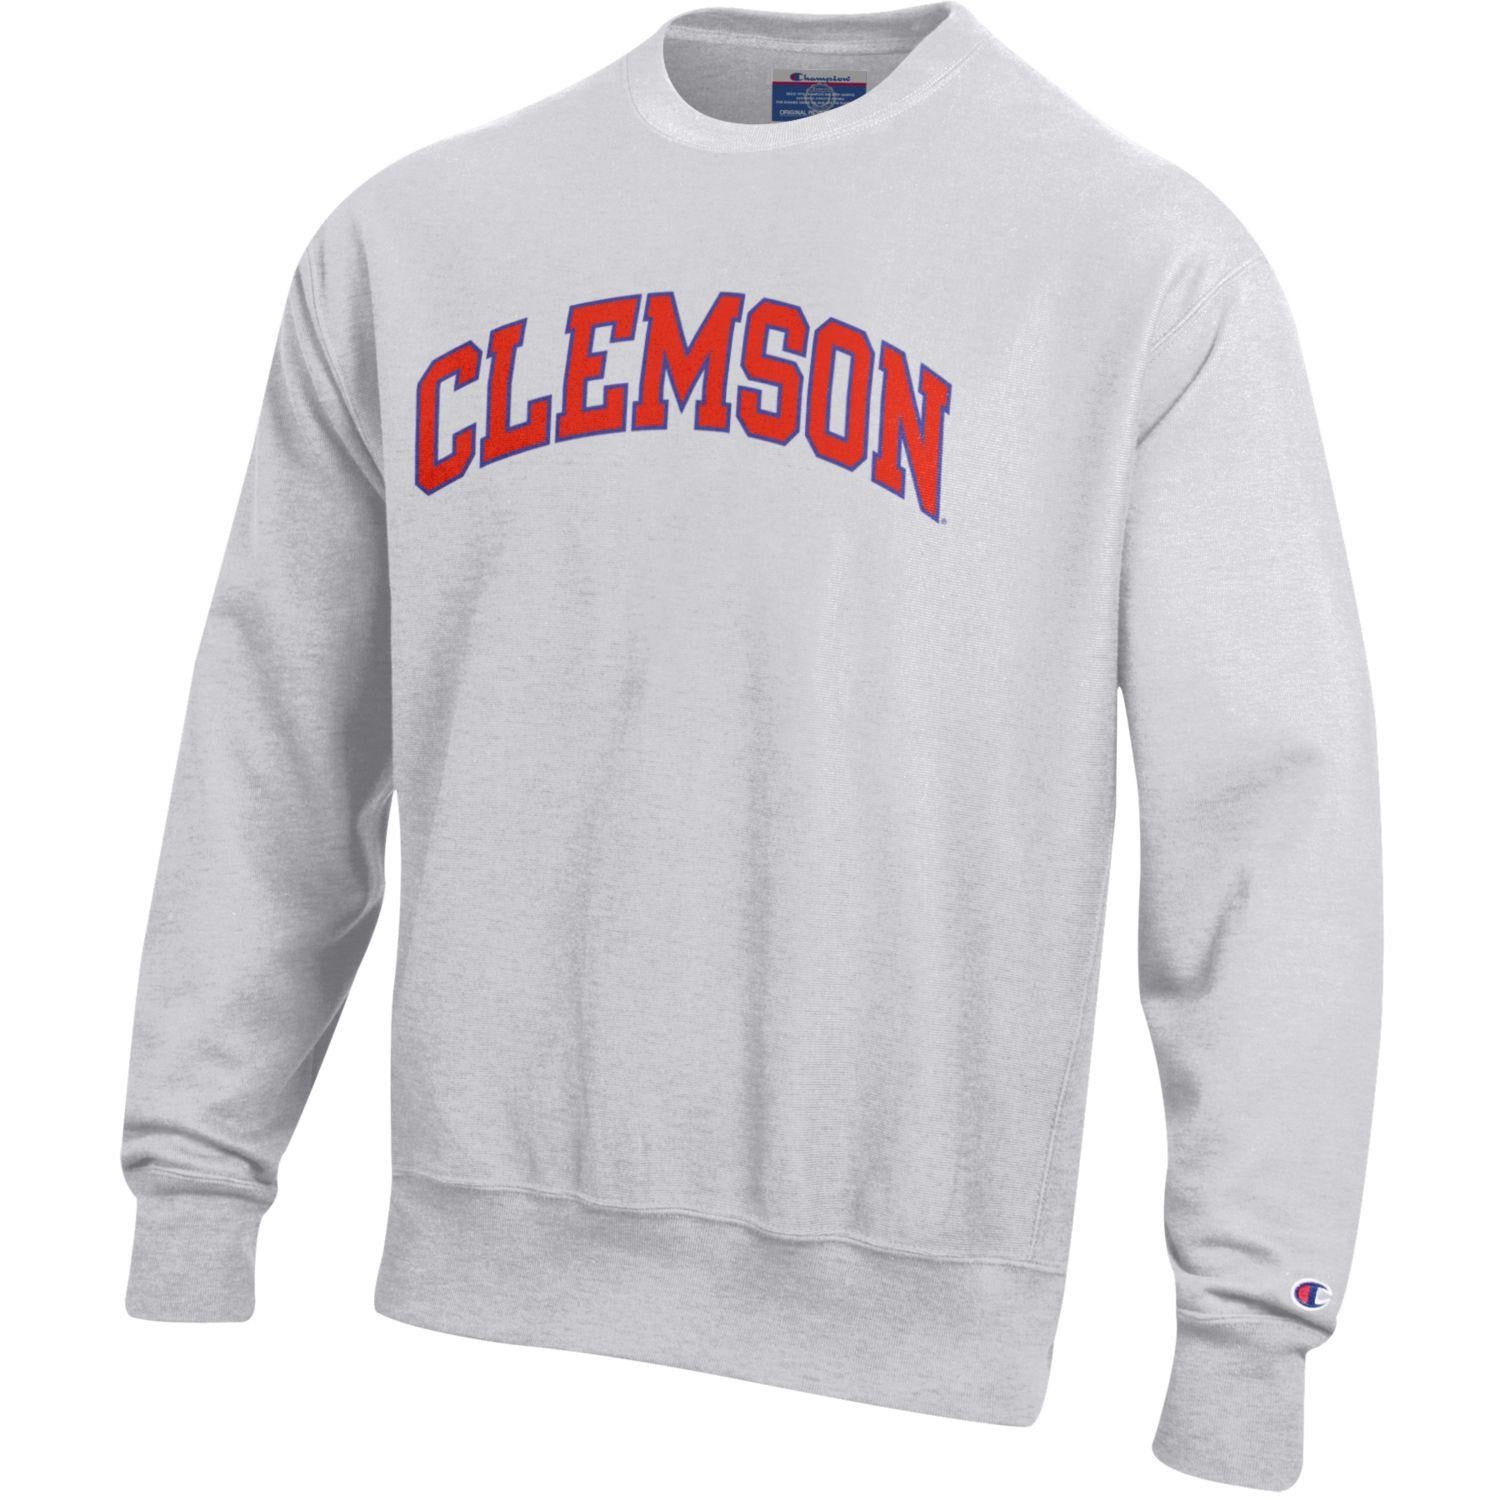 Clemson Tigers Champion Reverse Weave Sweater